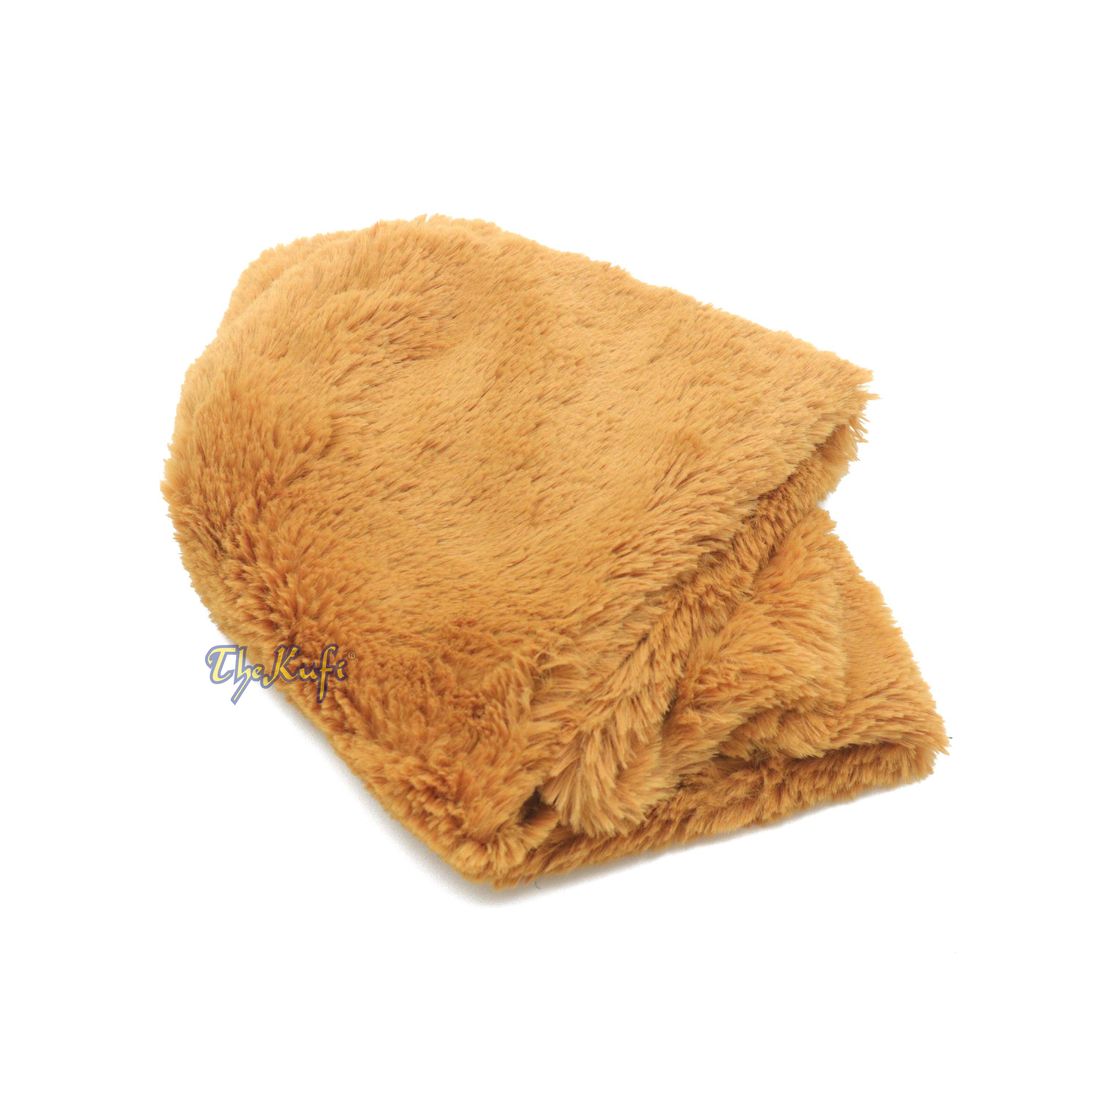 Golden Brown Winter Kufi Faux Fur Warm Chechen Uzbeki Style Islamic Hat Plush One-size Medium-large Stretchy 4-inch Tall Head Cover Muslim